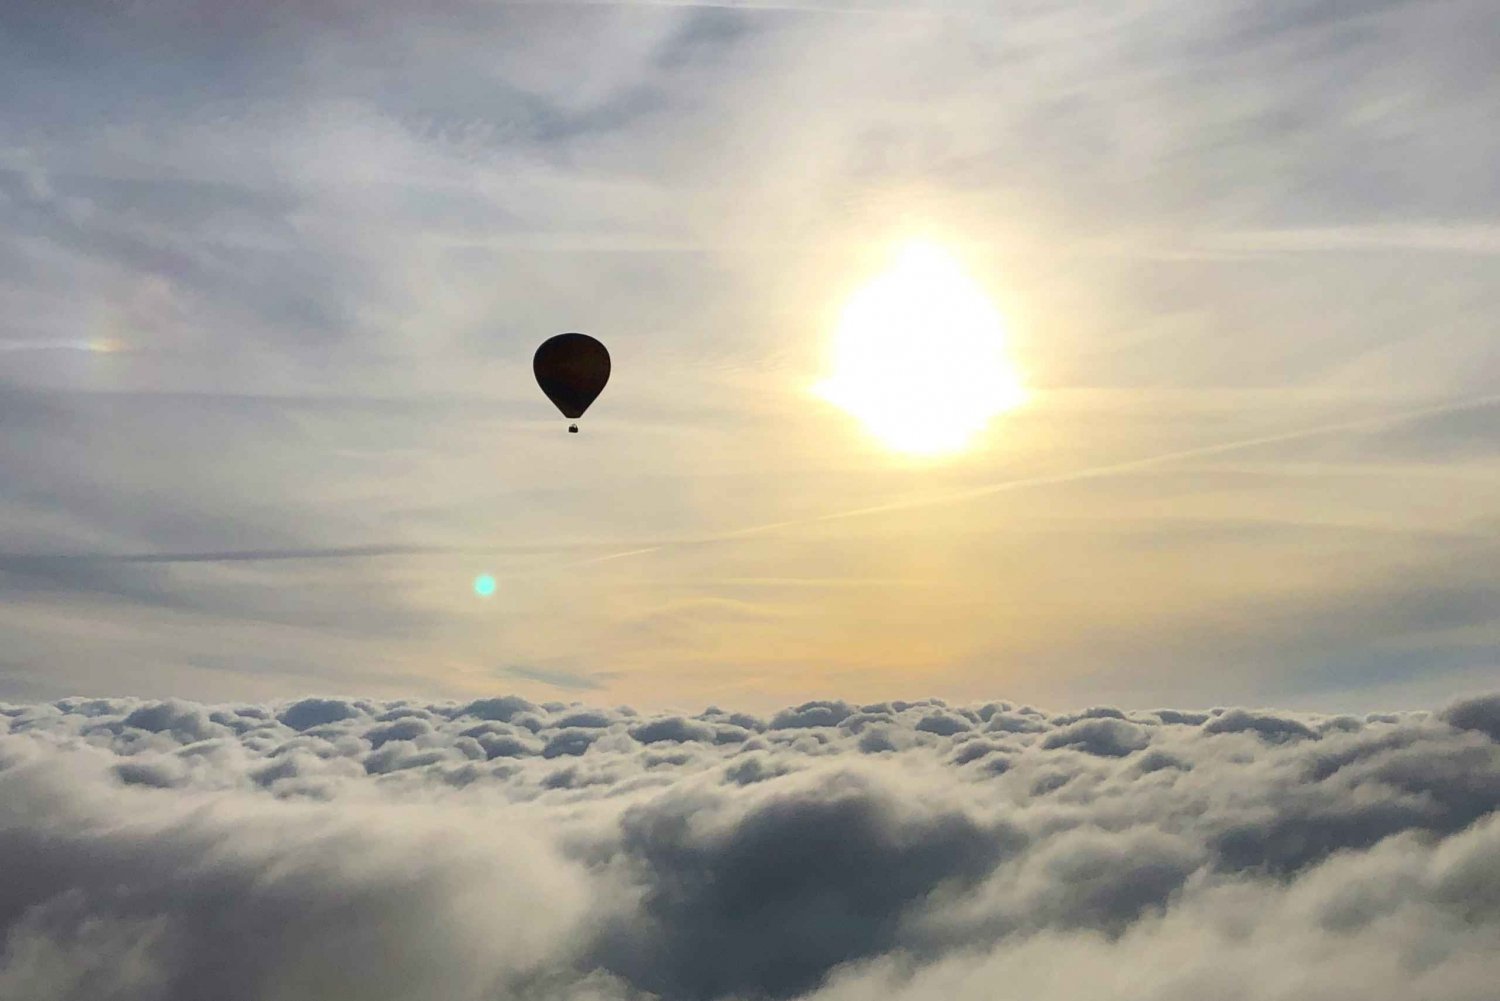 Barcelona: Pre-Pyrenæerne luftballon-tur